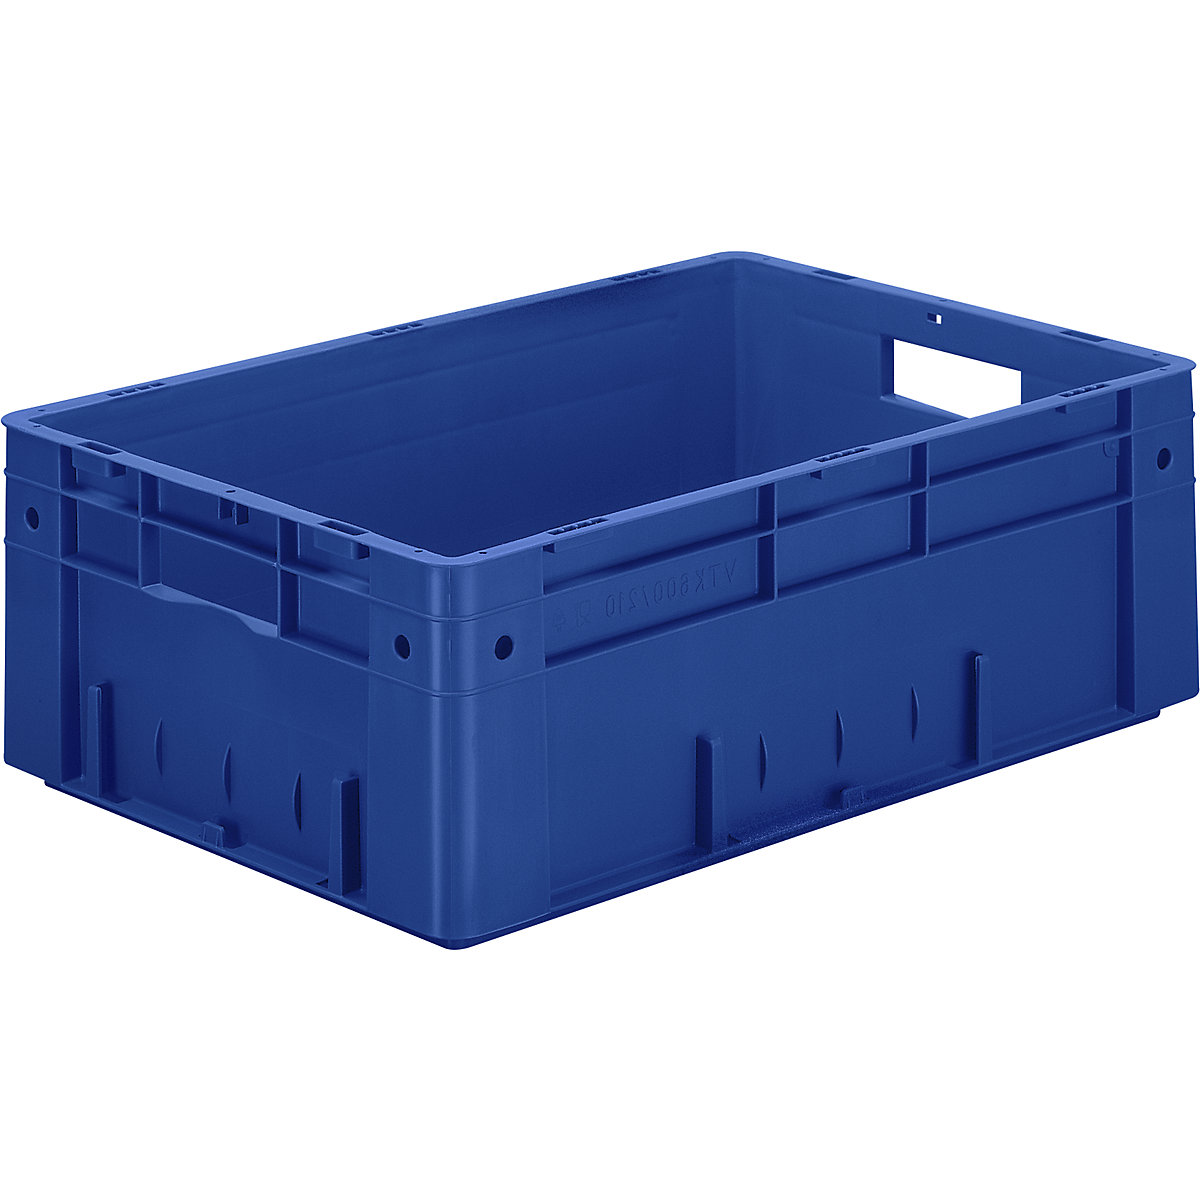 Schwerlast-Euro-Behälter, Polypropylen, Volumen 38 l, LxBxH 600 x 400 x 210 mm, Wände geschlossen, Boden geschlossen, blau, VE 2 Stk-5